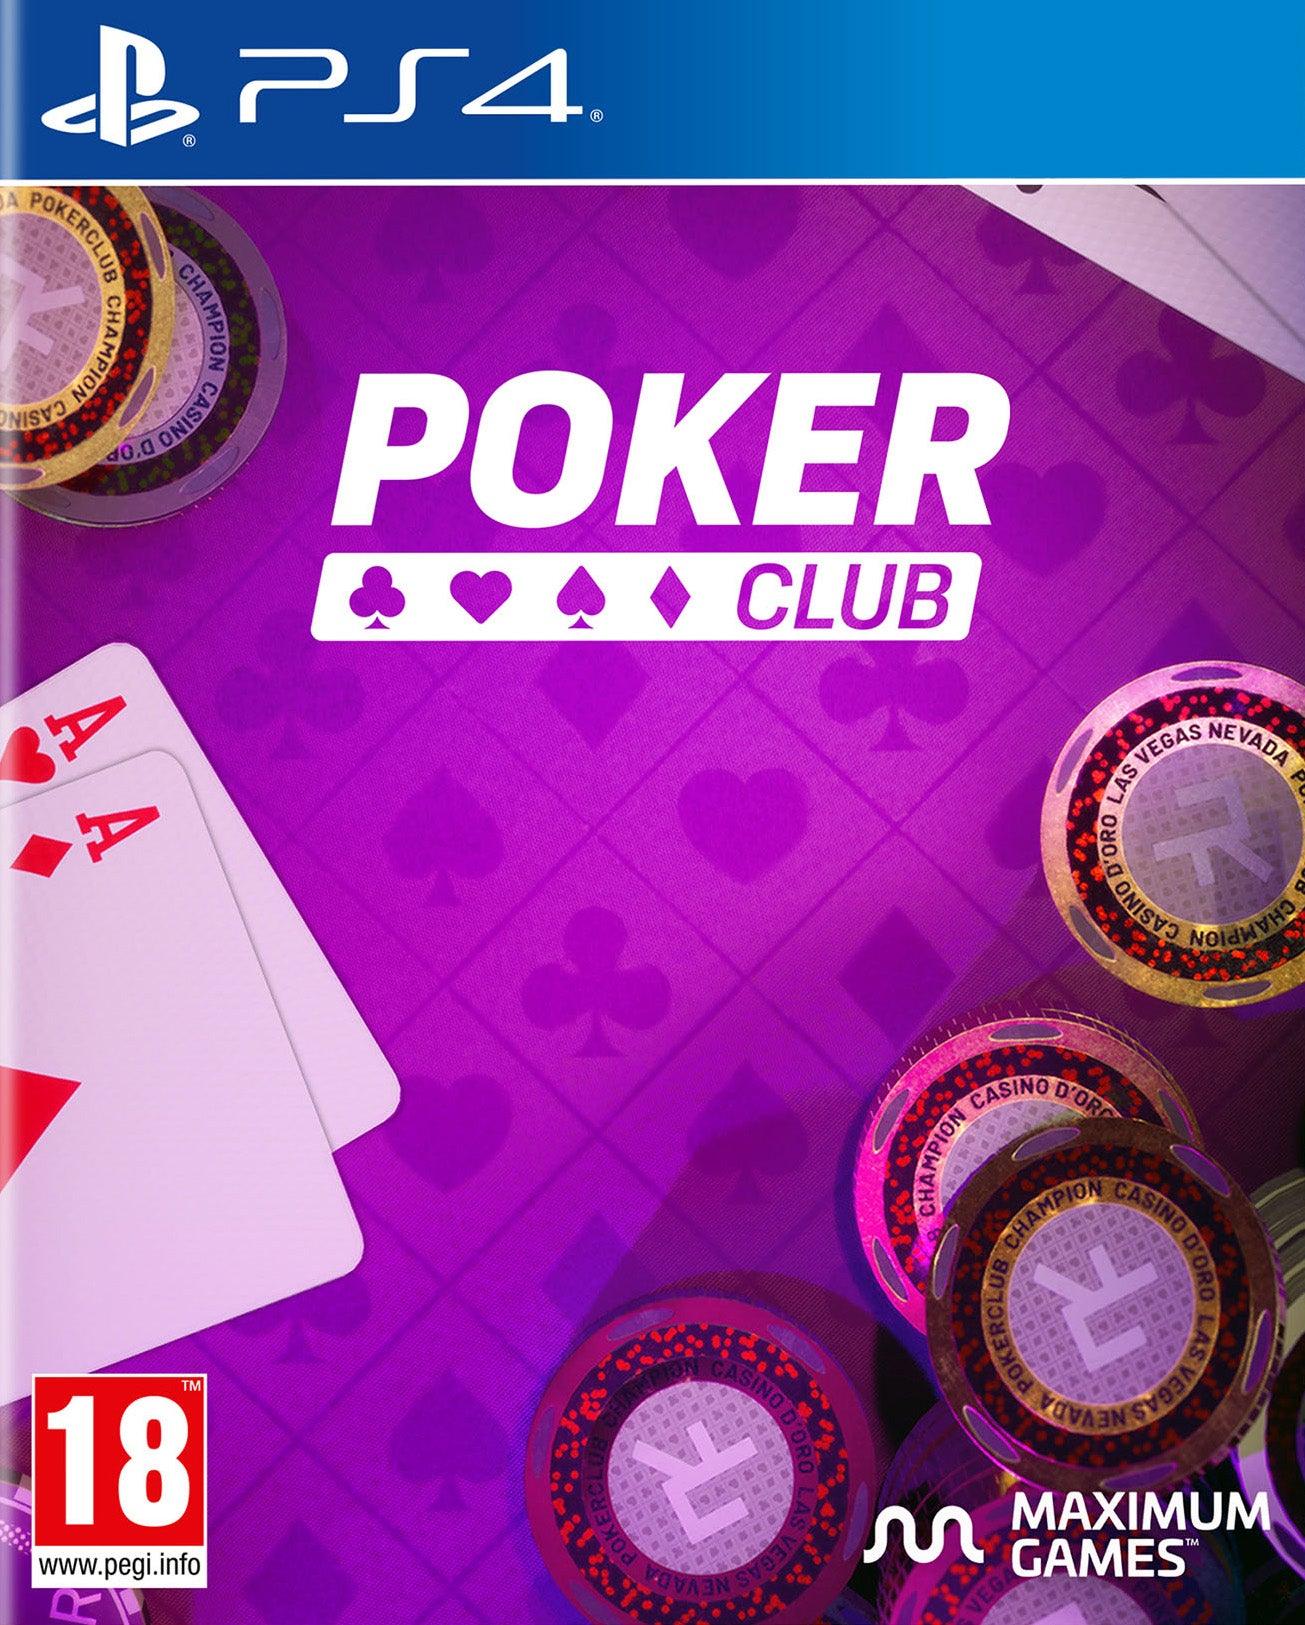 Poker Club - Want a New Gadget